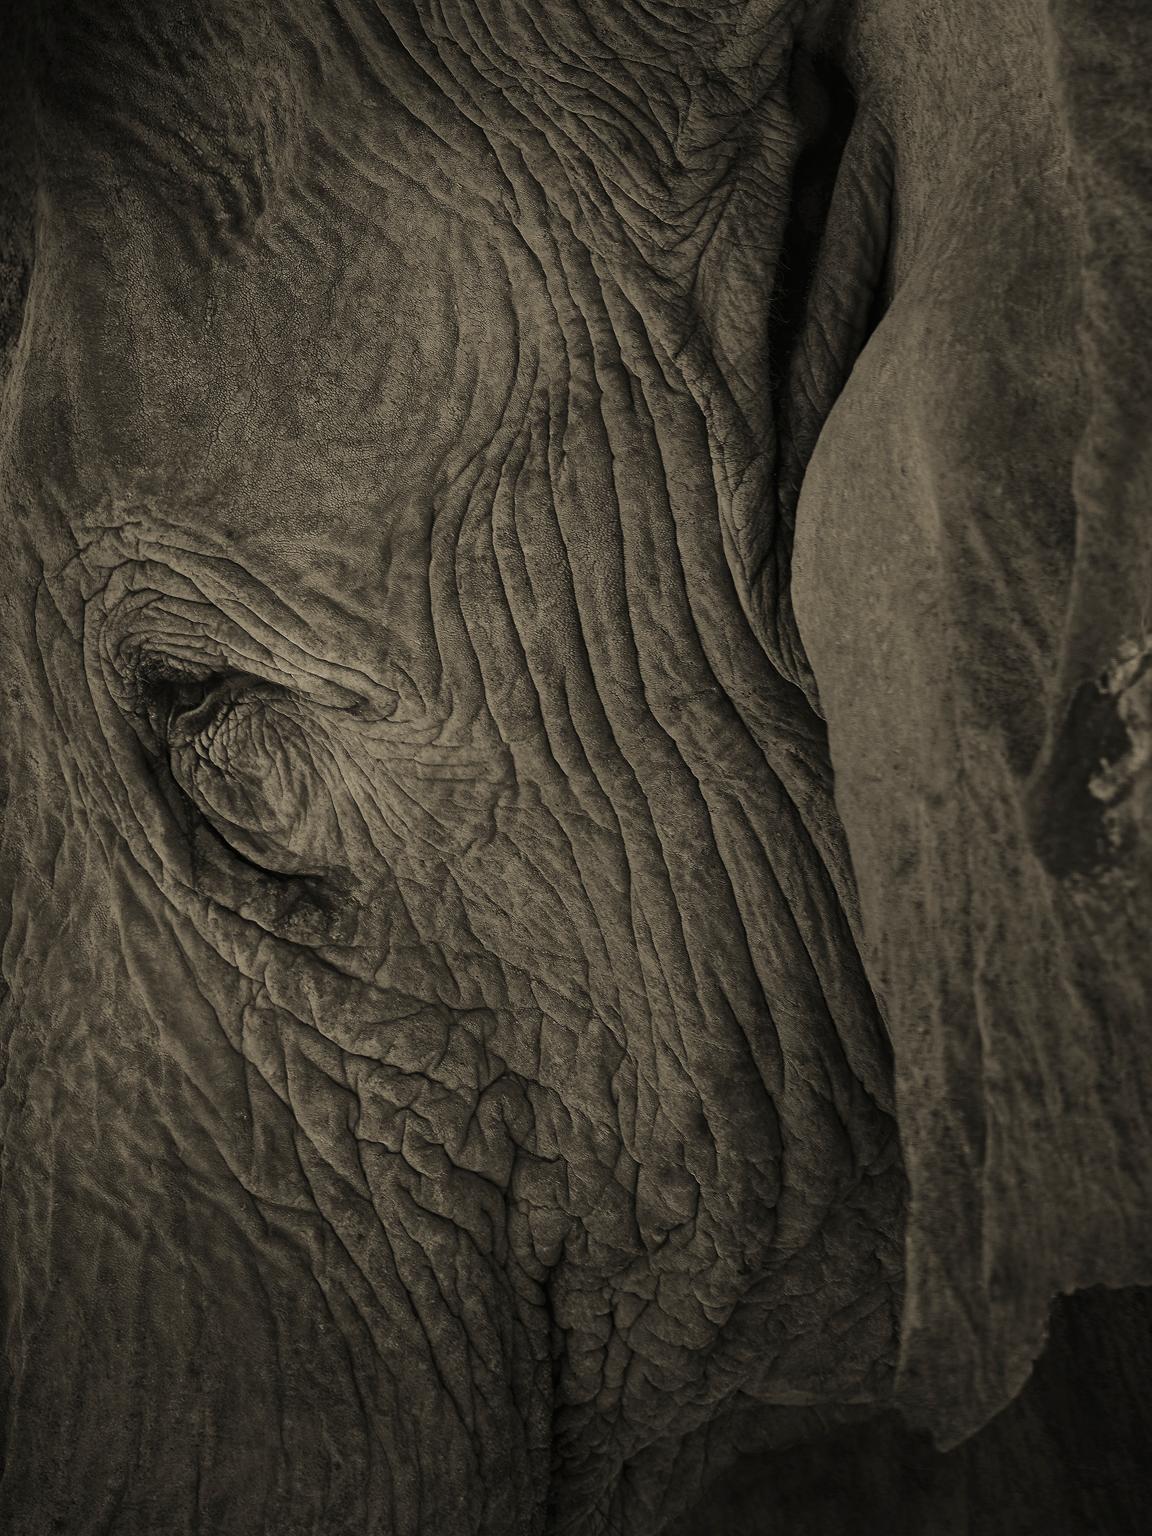 Chris Gordaneer Black and White Photograph - Elephant No. 3